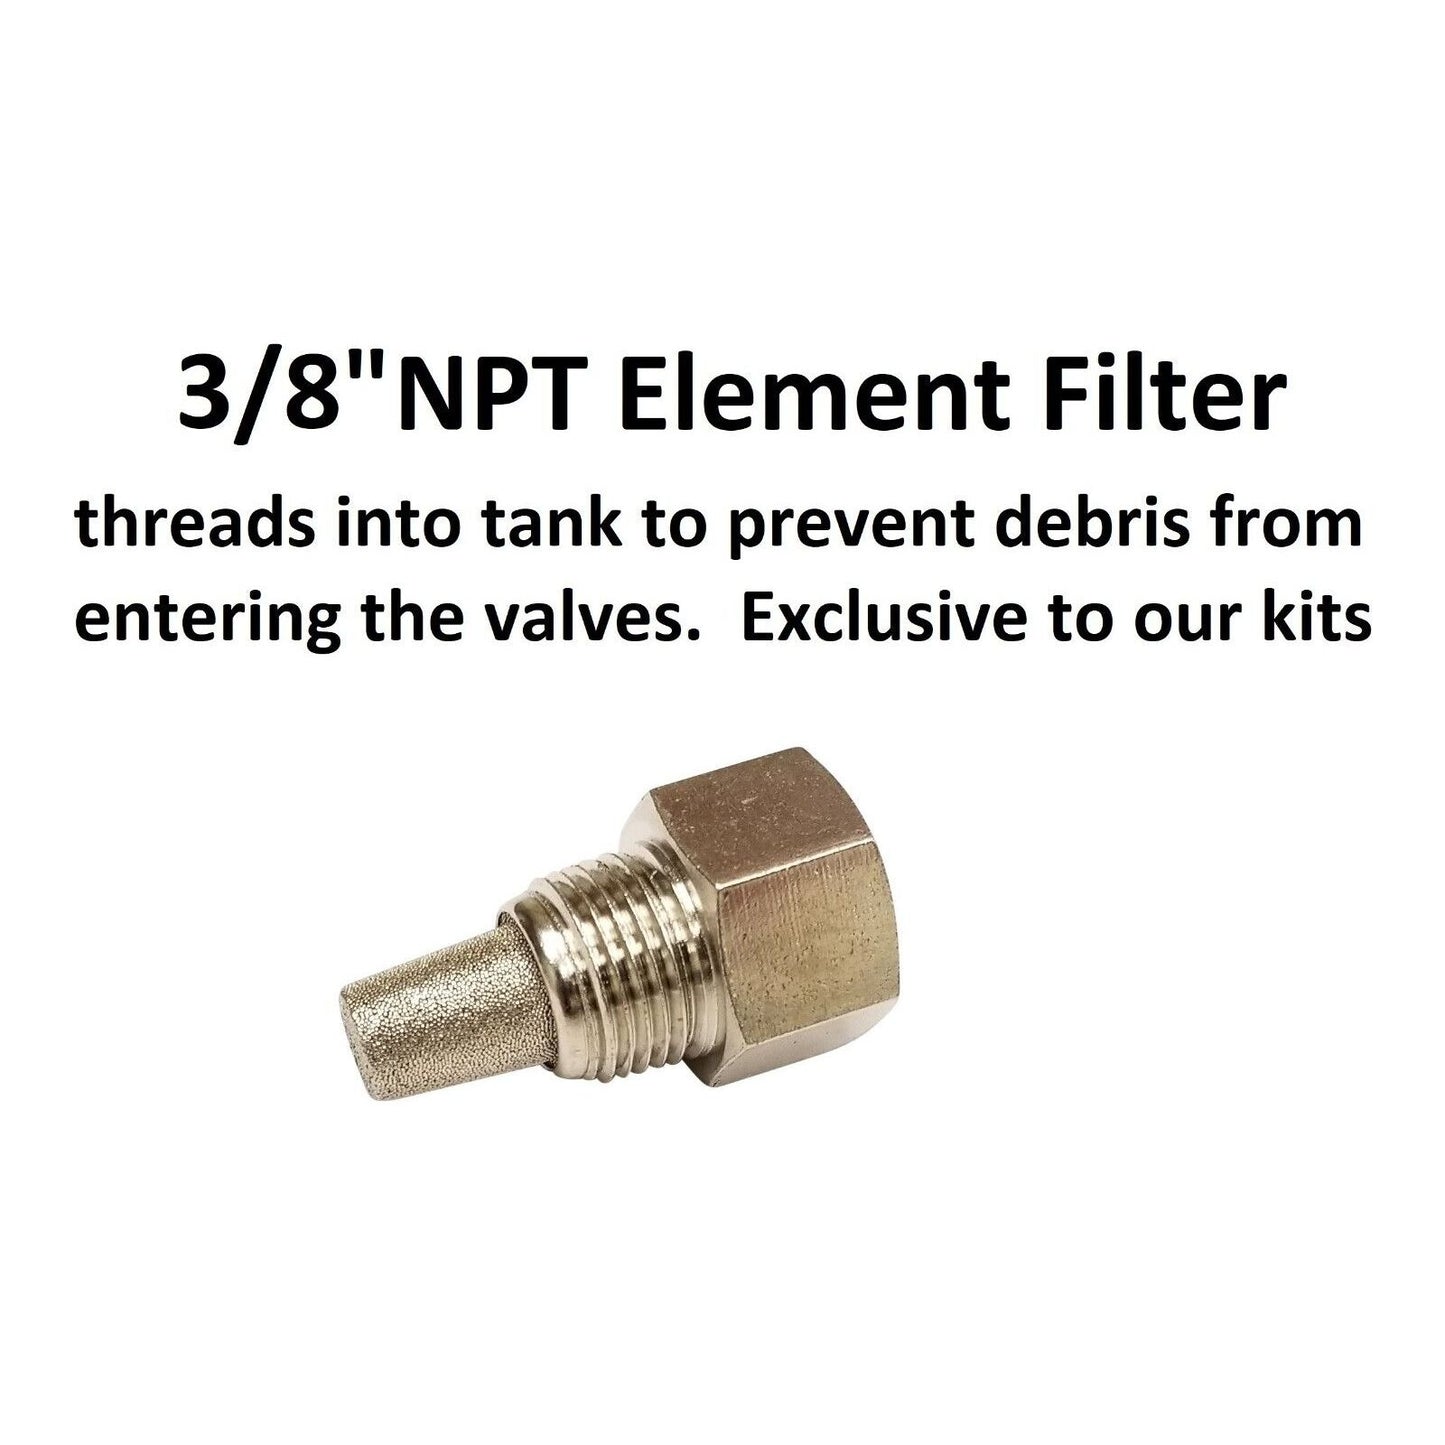 3/8" NPT element filter